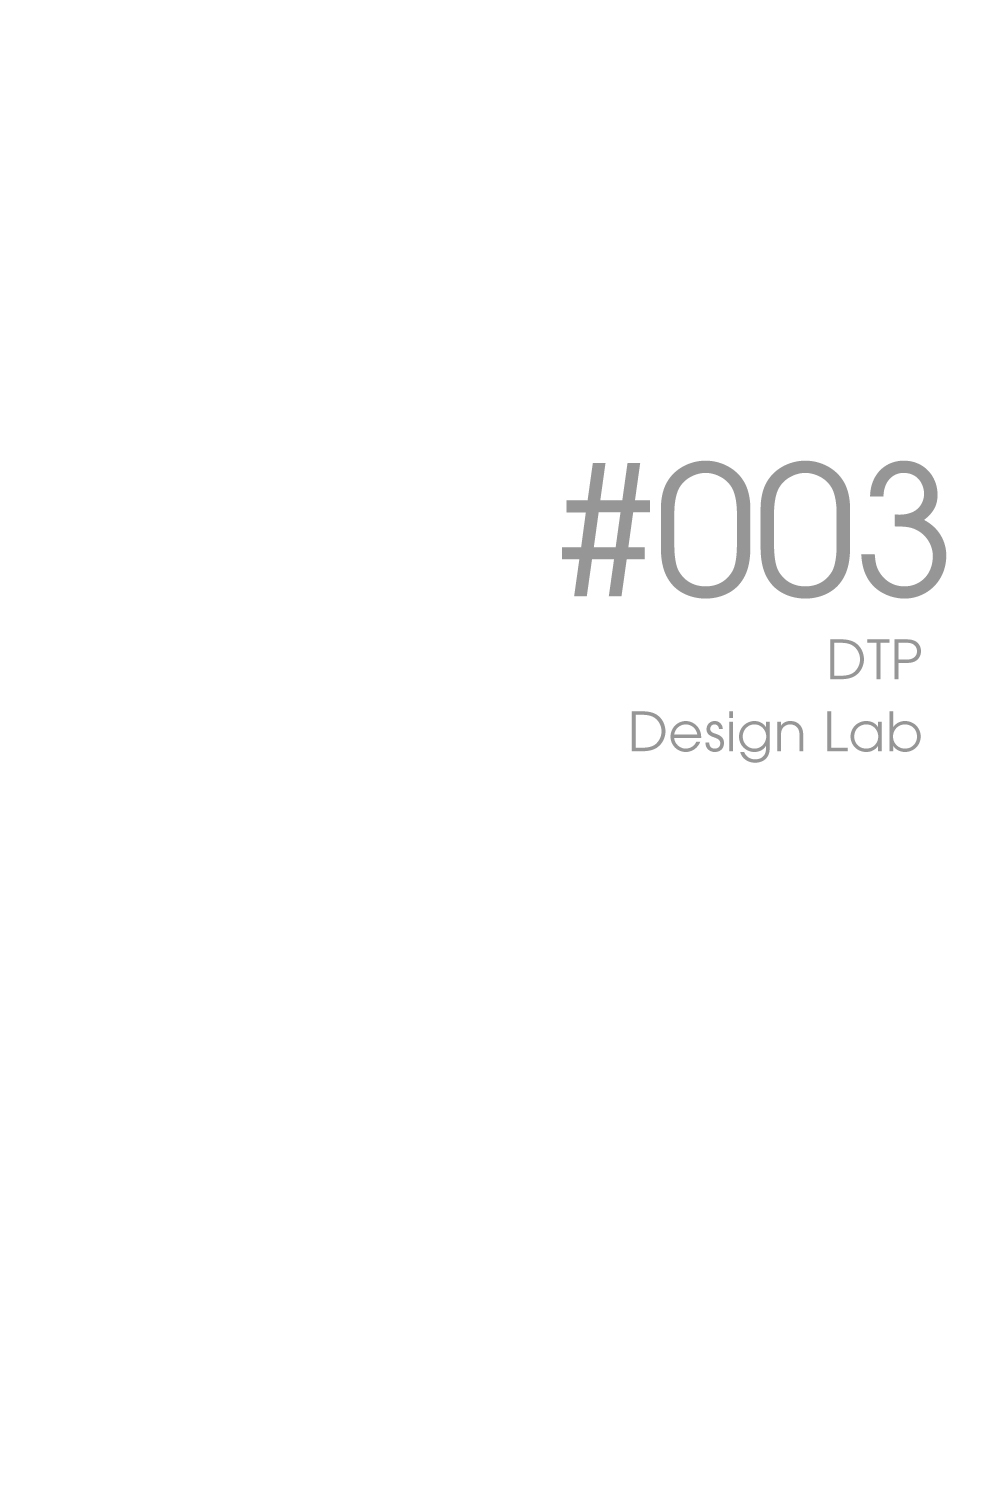 DTP_DesignLab